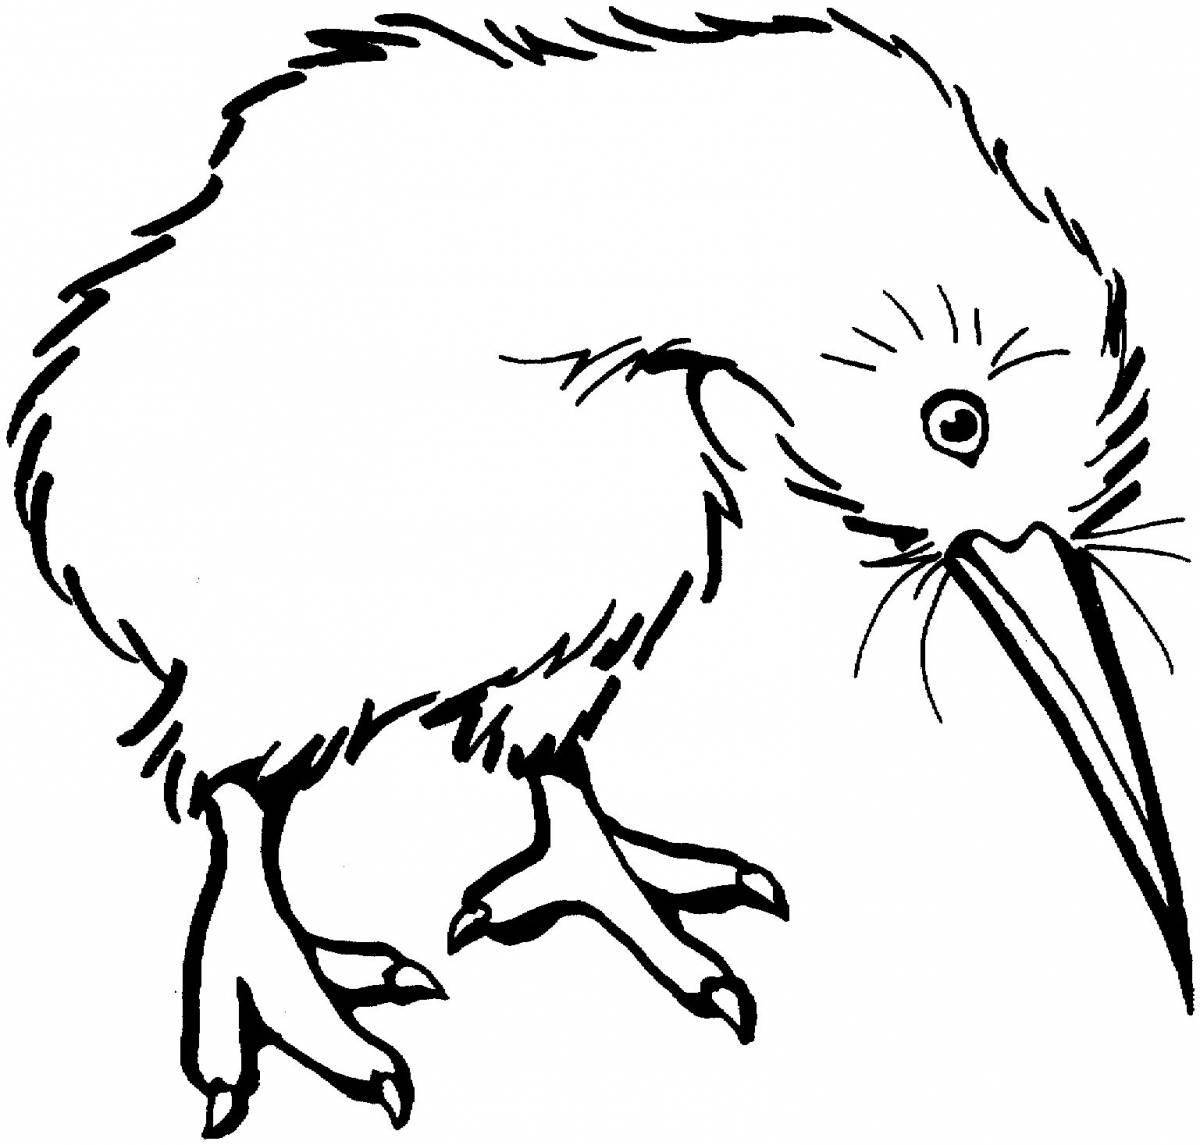 Charming kiwi bird coloring book